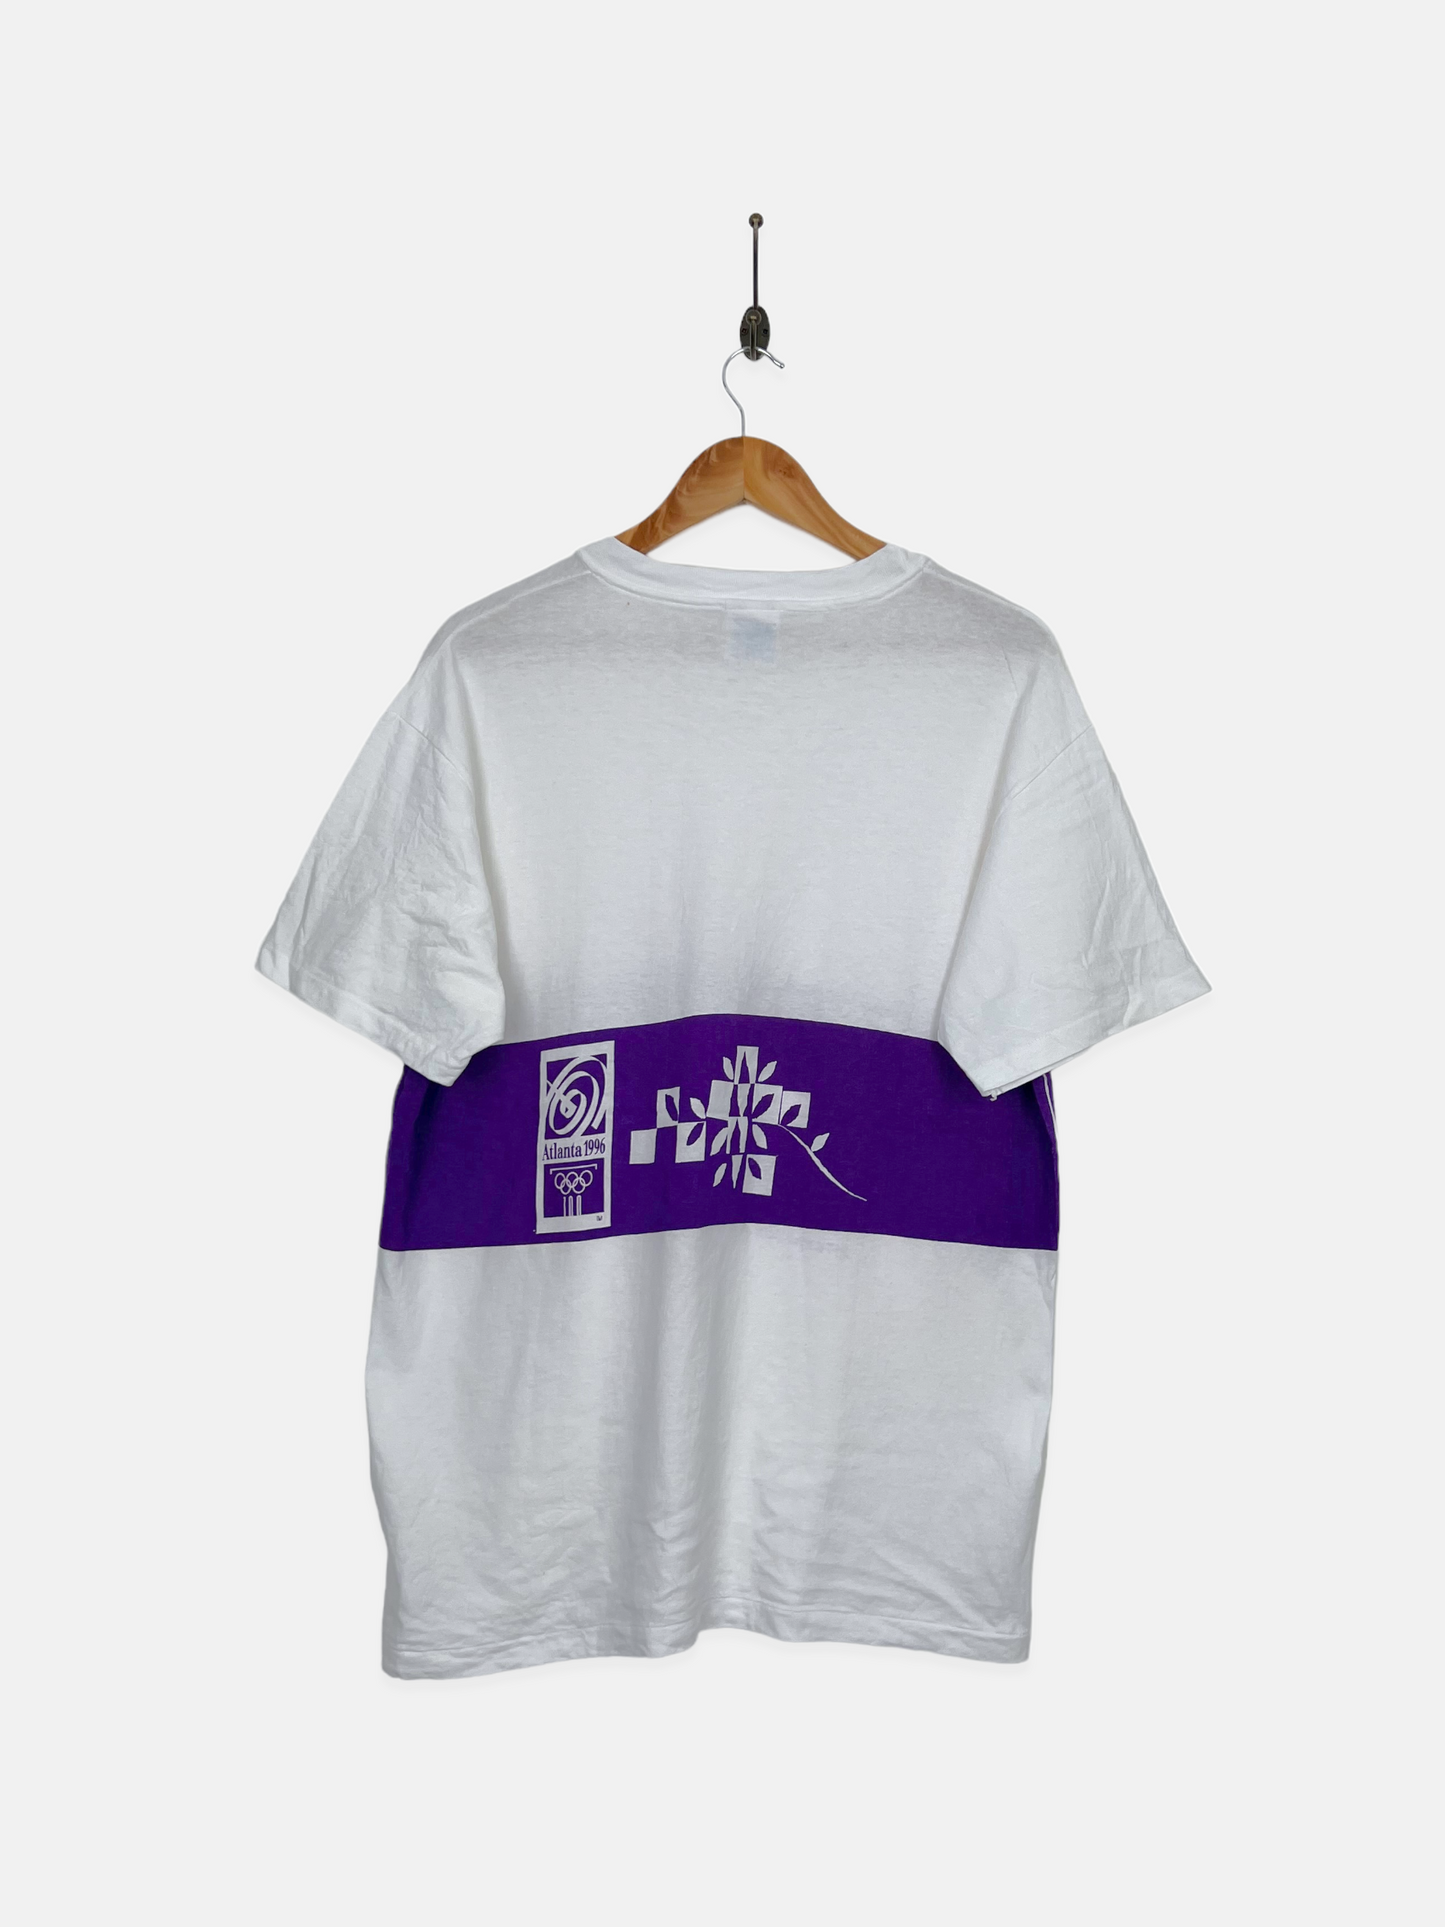 1996 Atlanta Olympics USA Made Vintage T-Shirt Size L